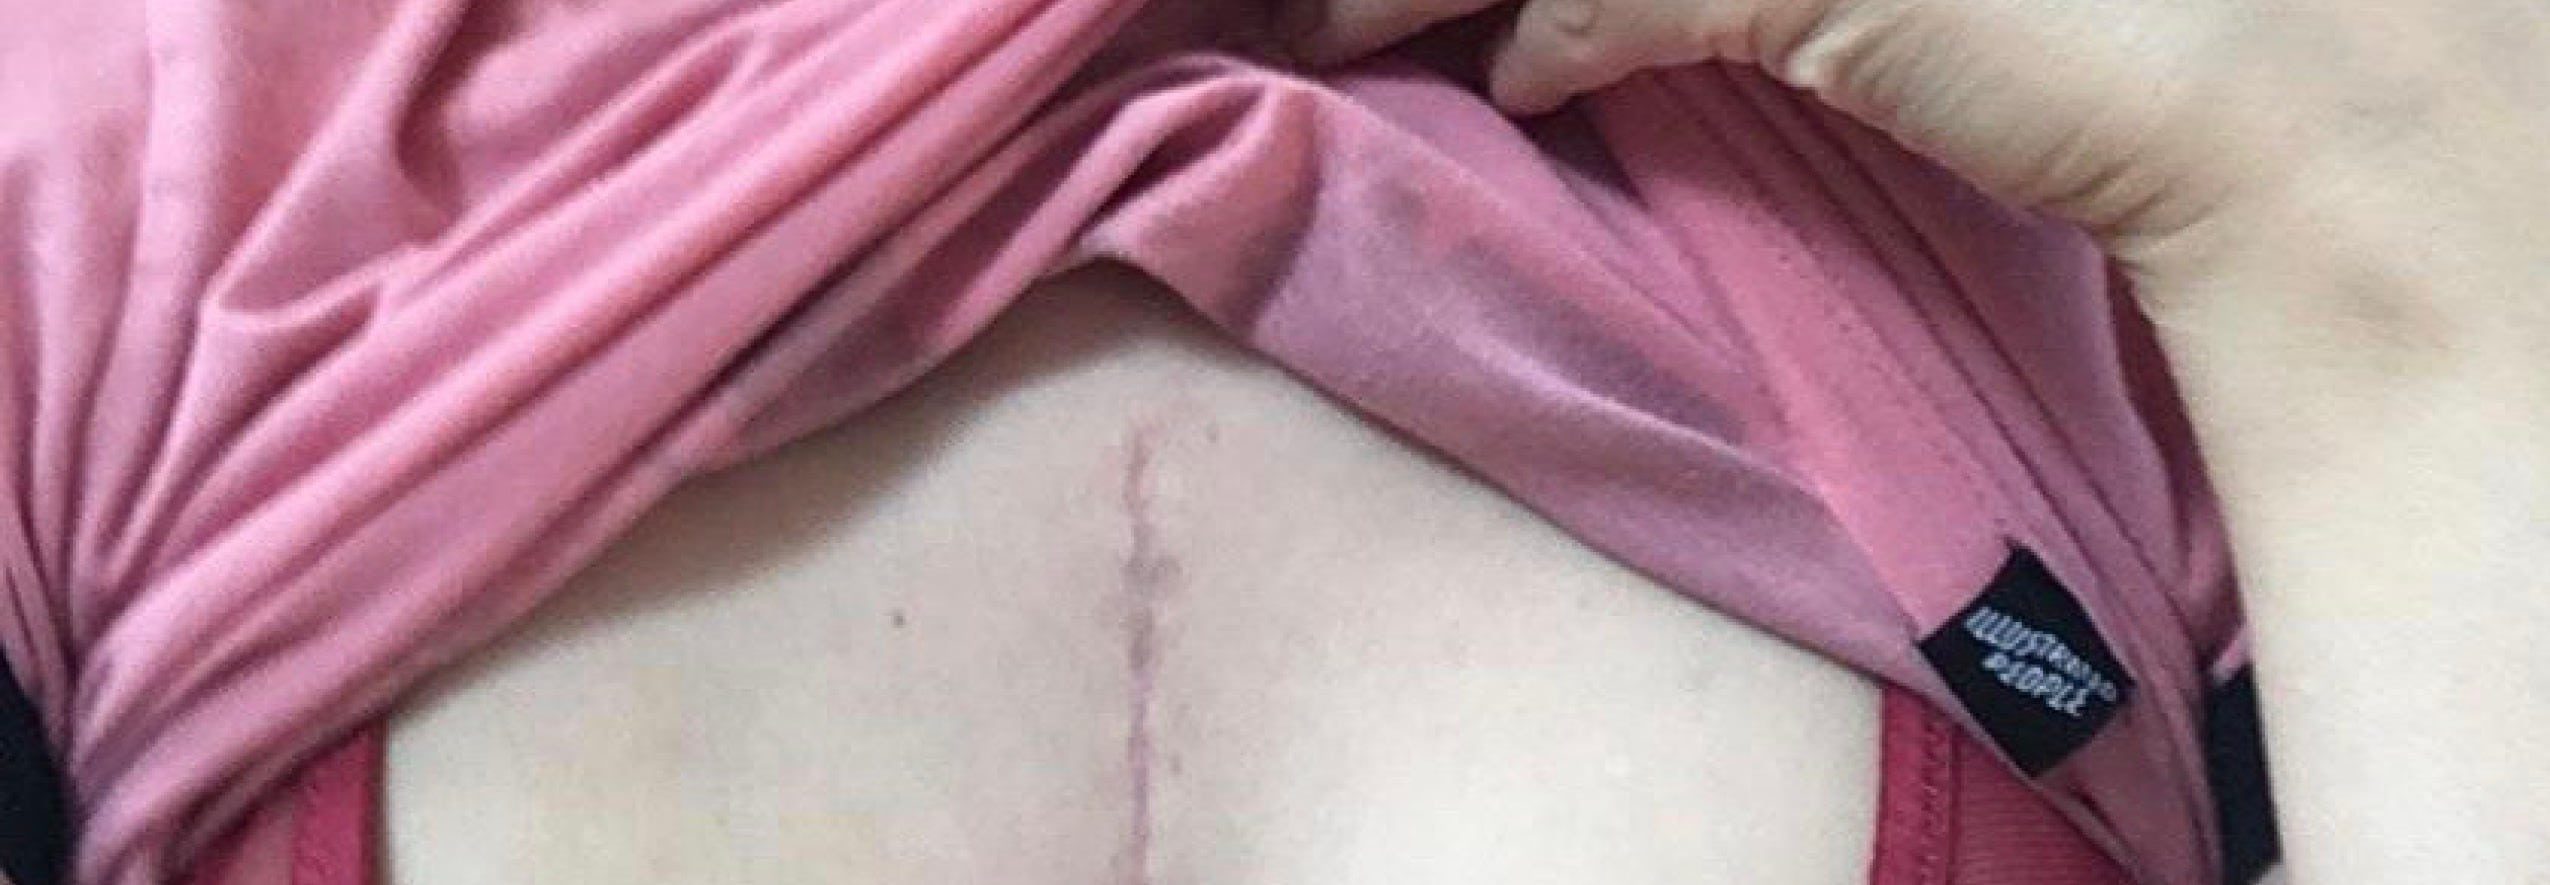 Surgical scar keloid